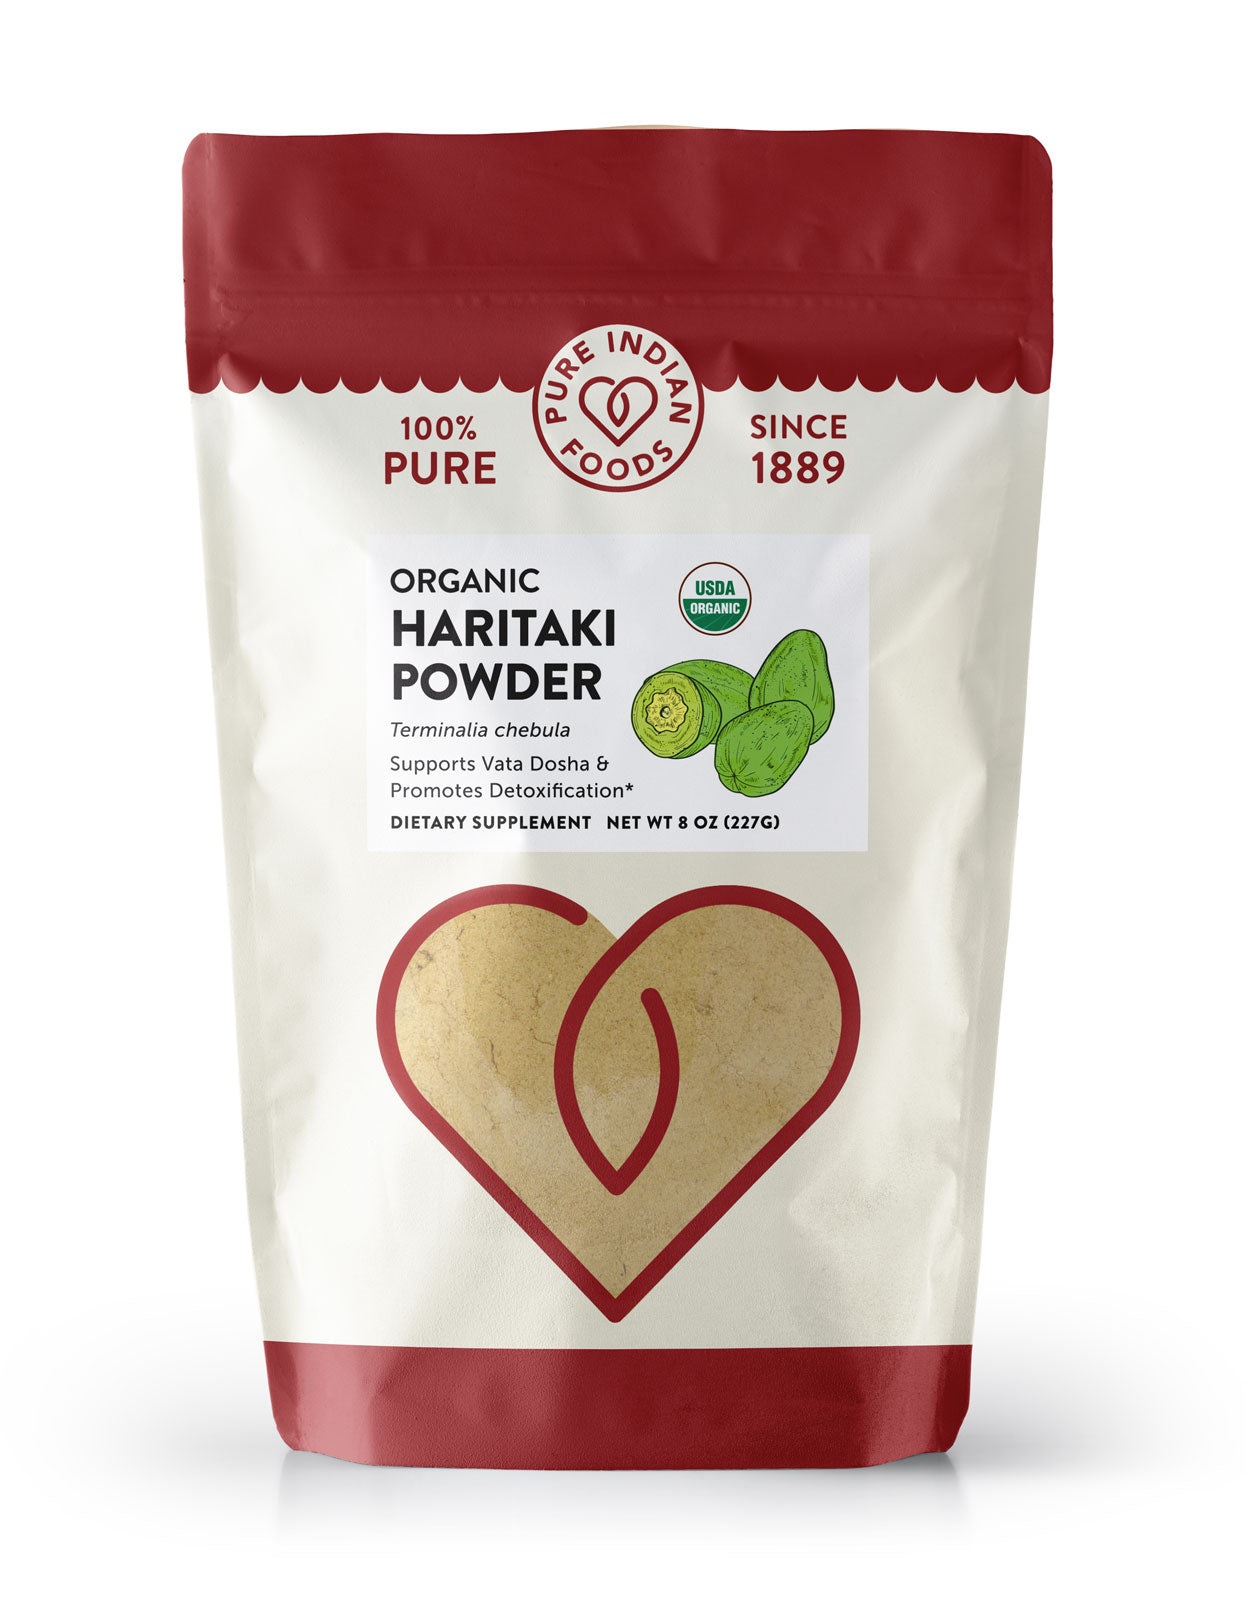 1 bag of Organic Haritaki Powder from Pure Indian Foods.